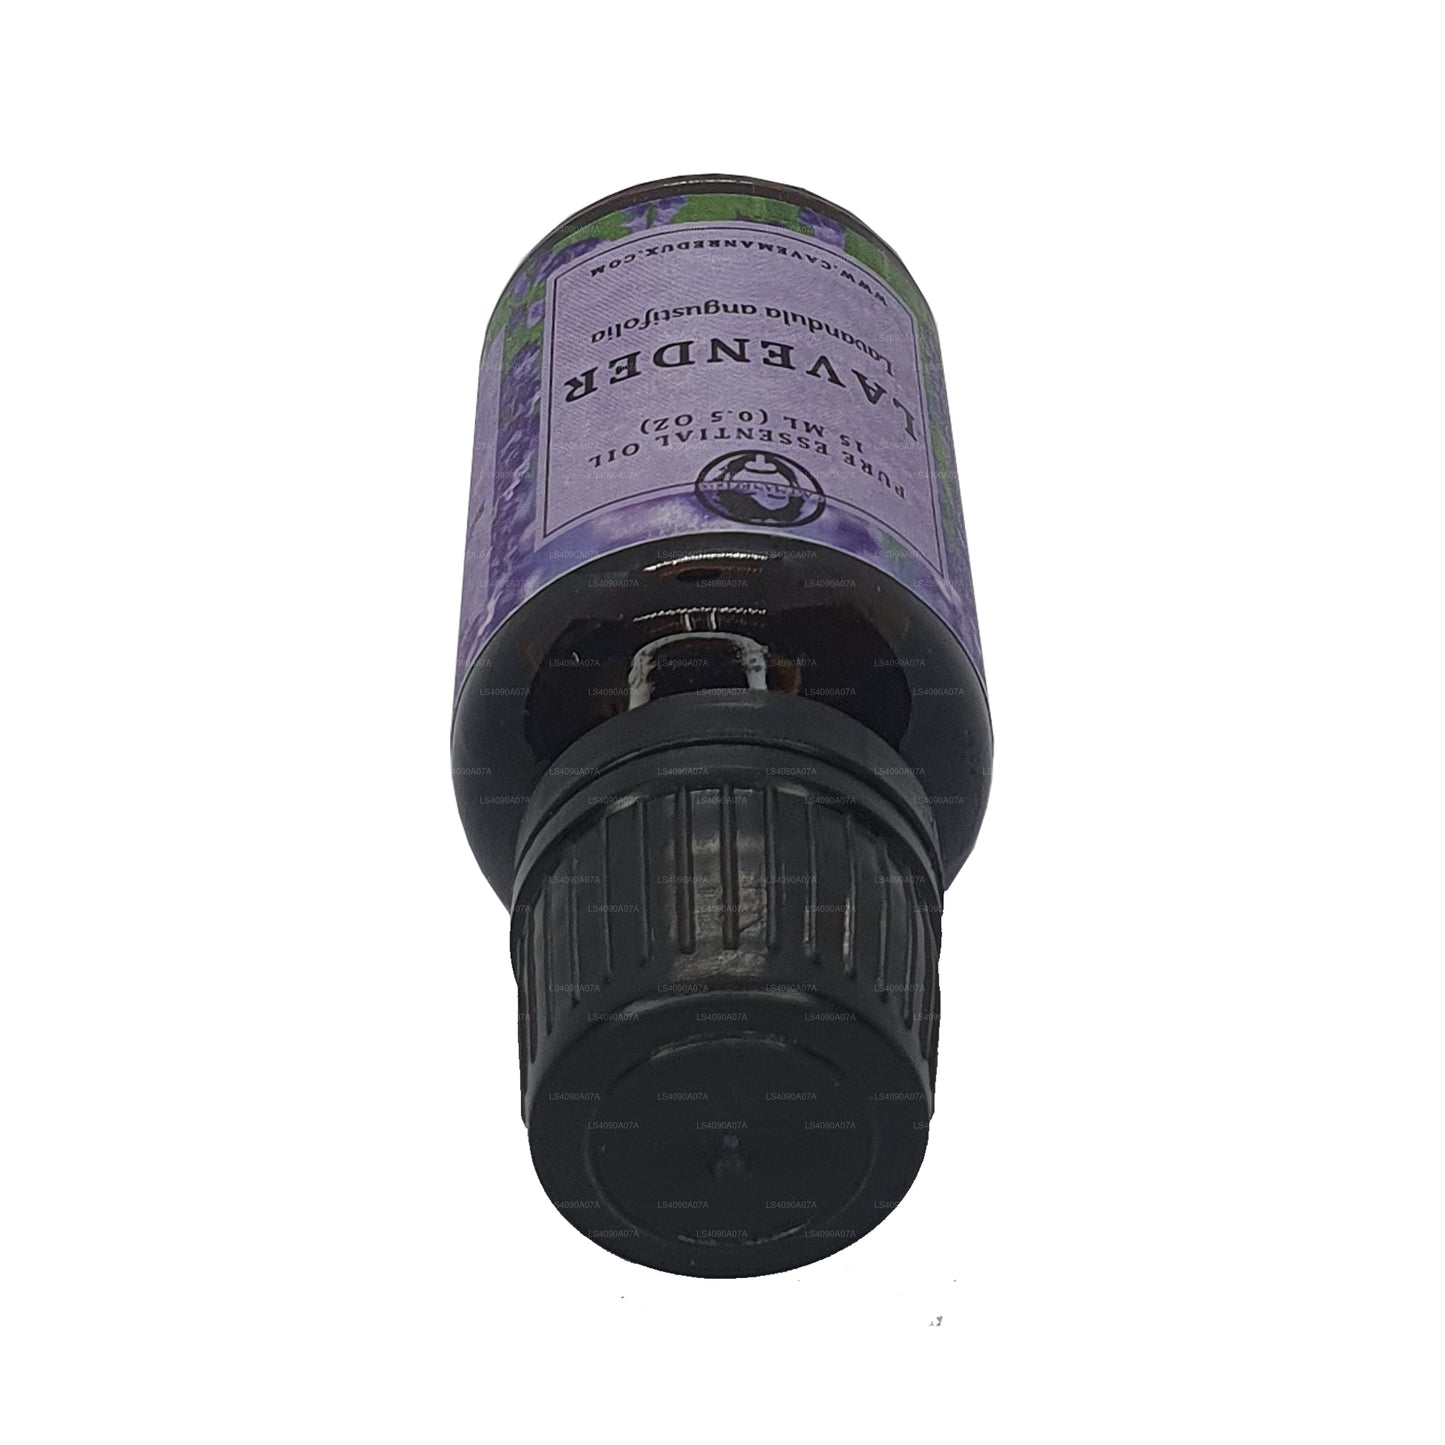 Lakpura Lavender Olejek eteryczny (15ml)